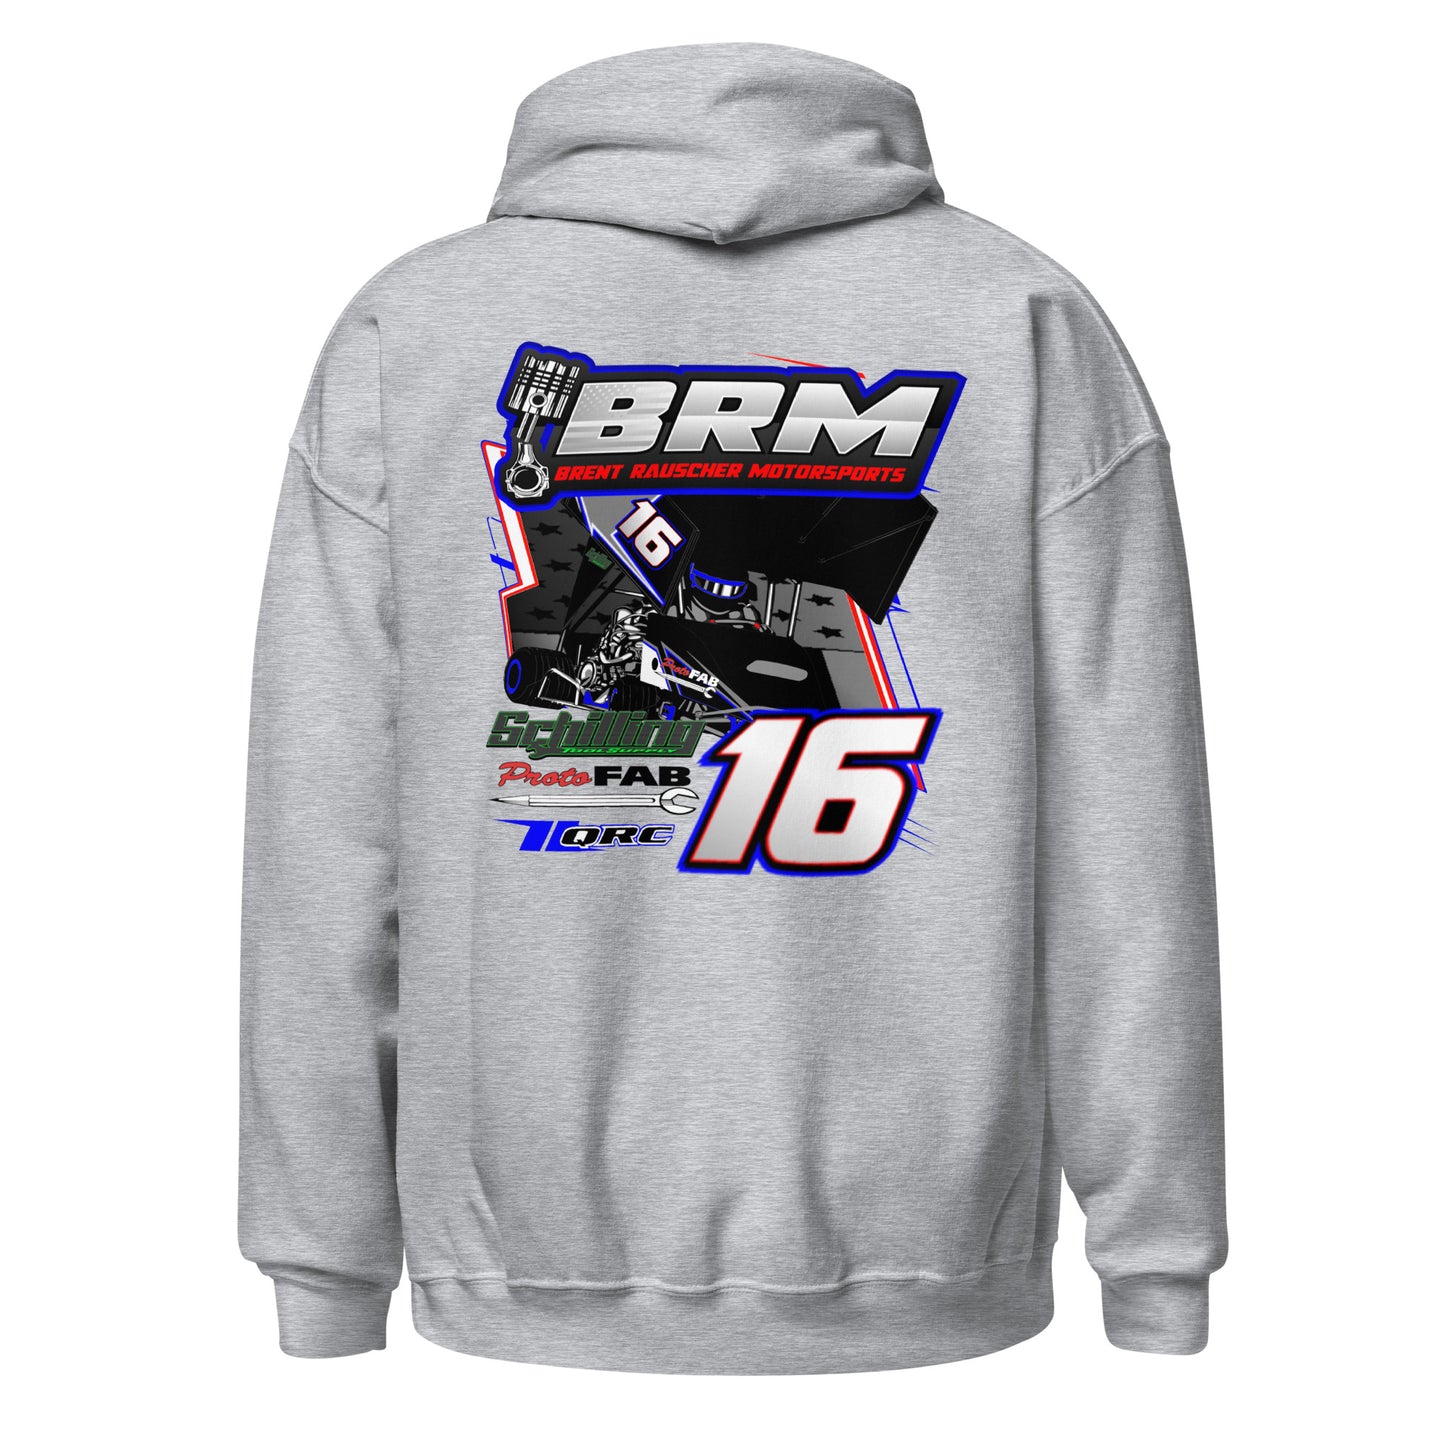 Brent Rauscher Motorsports Adult Hoodie Sweatshirt